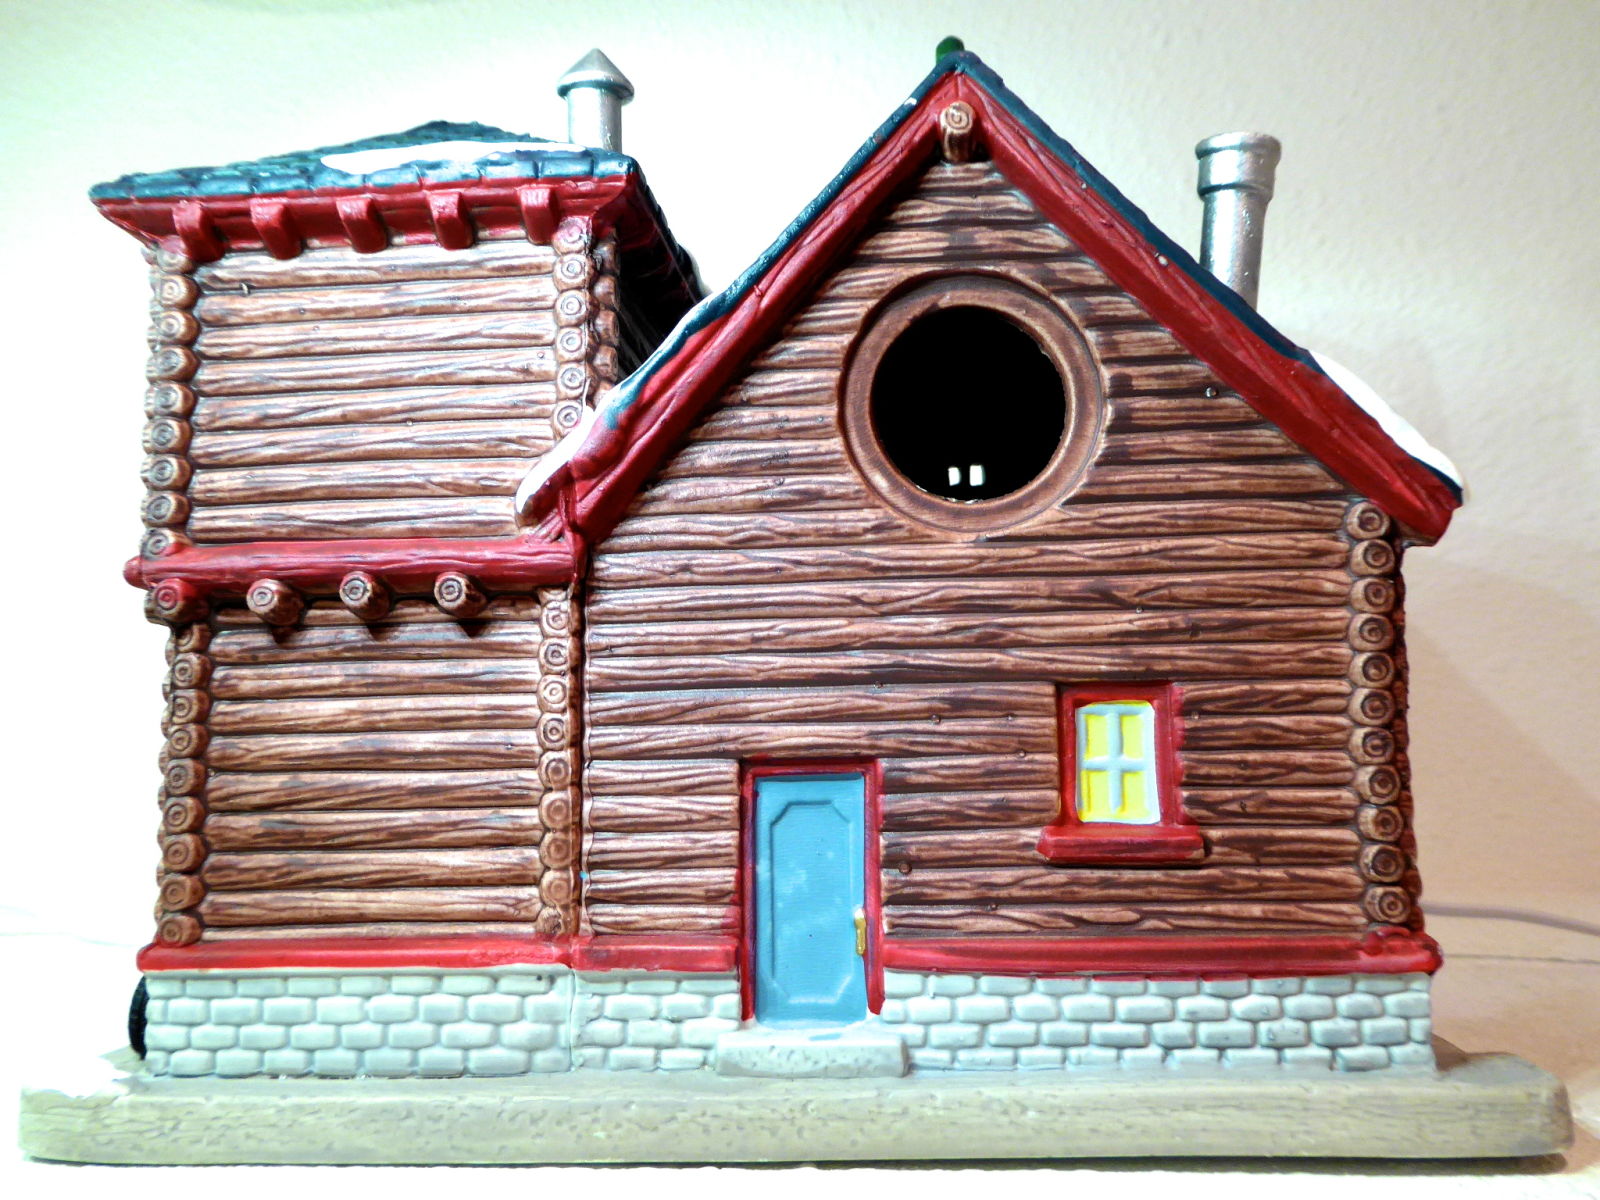 Illustration for article titled Christmas Village 17: Big Pine Gas Station